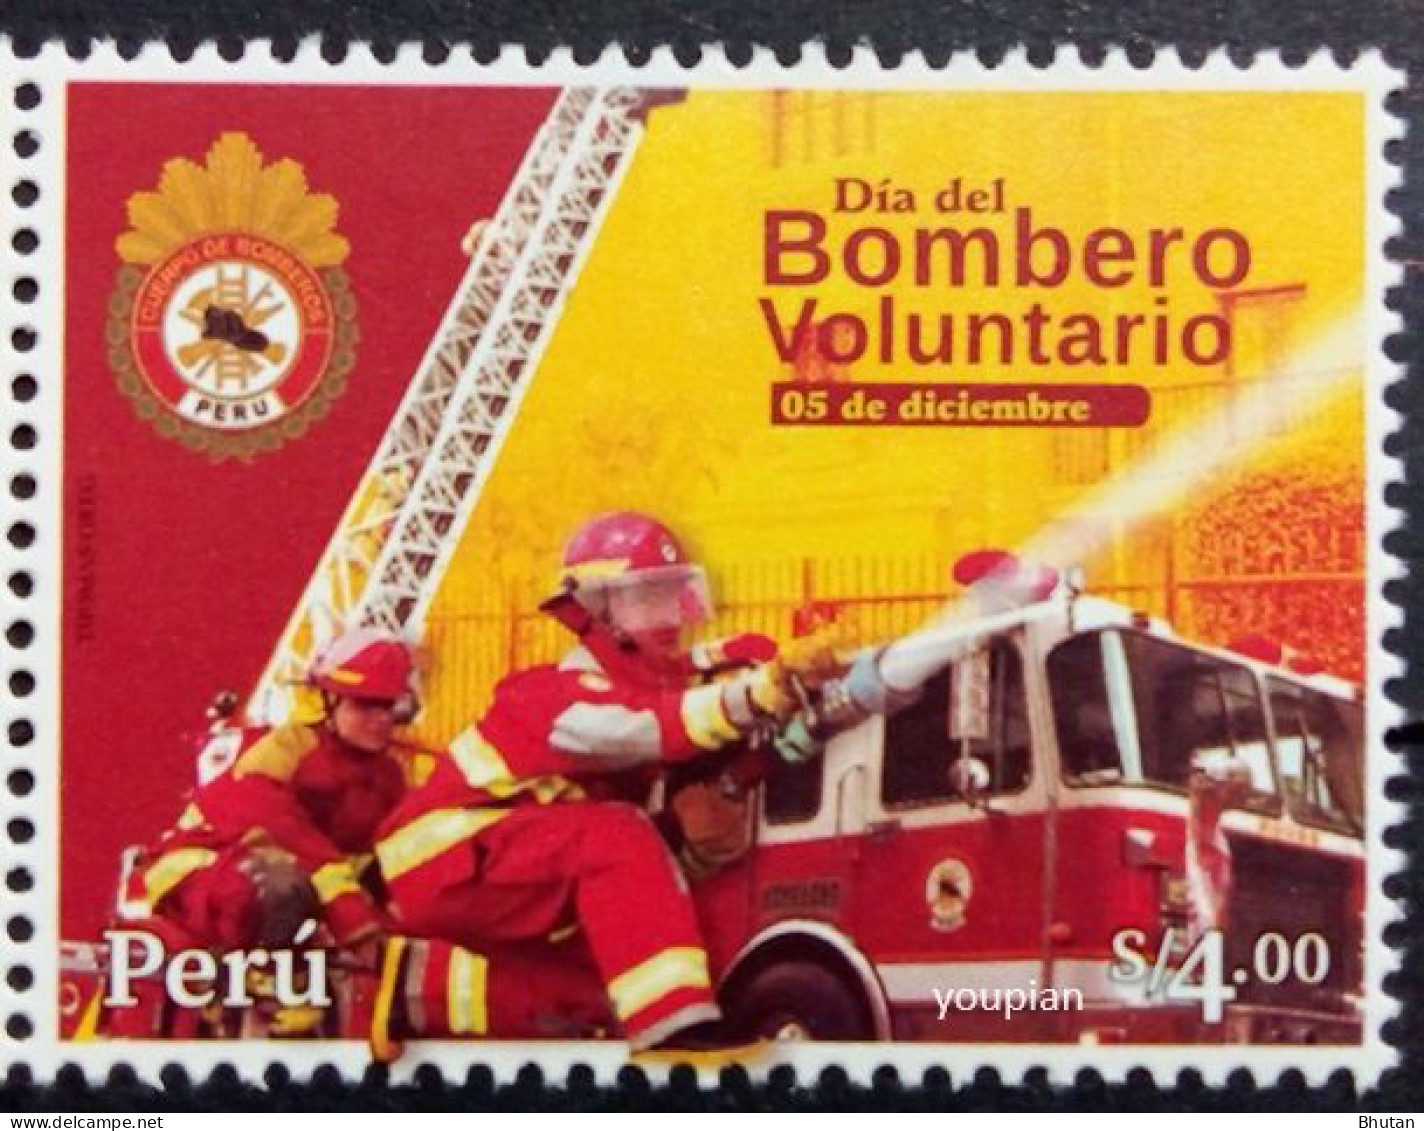 Peru 2023, Voluntarily Bombero Day, MNH Single Stamp - Peru